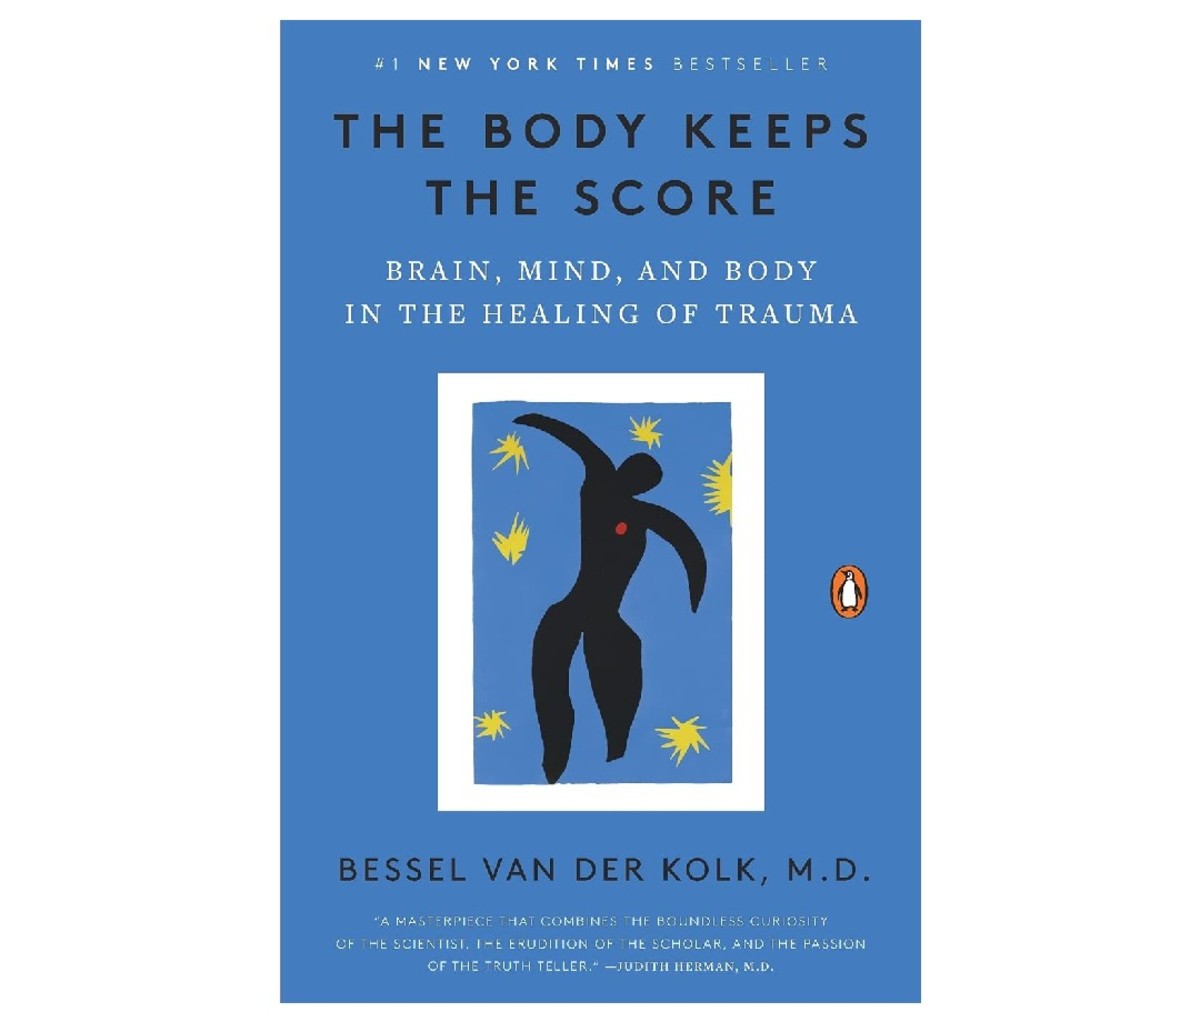 The Body Holds the Score: Brain, Mind, and Body in Healing Trauma by Bessel van der Kolk, MD